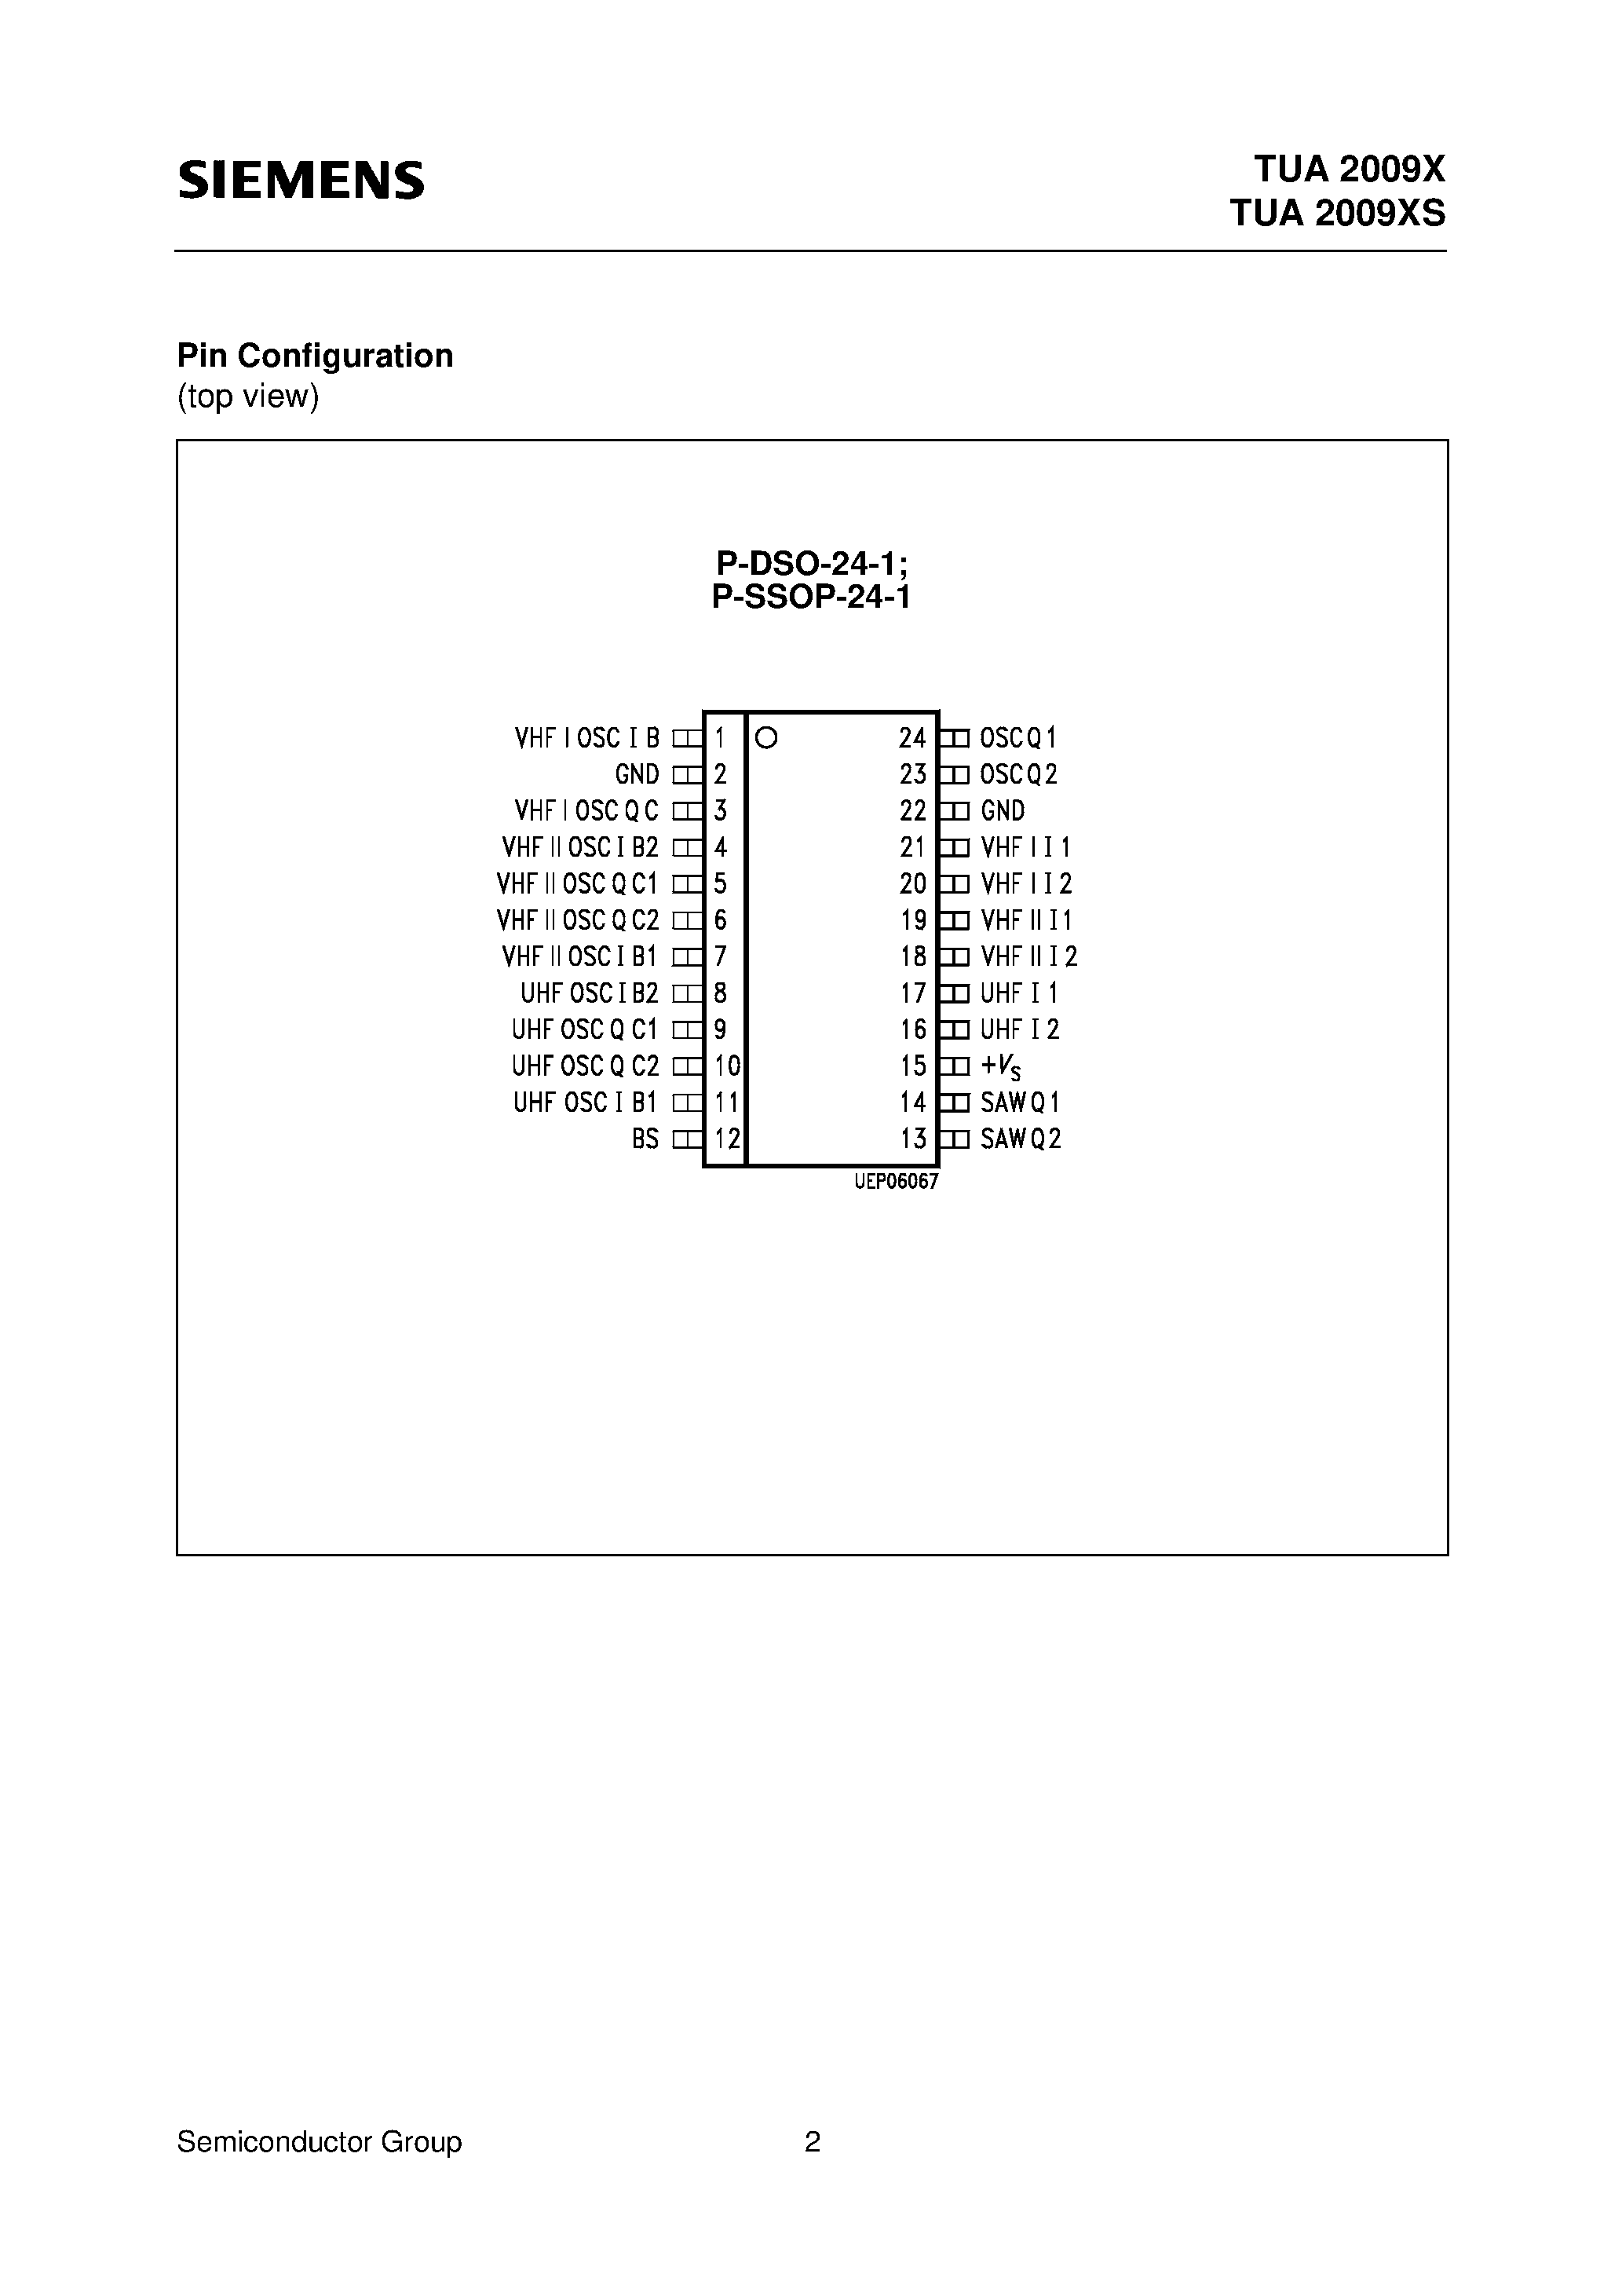 Datasheet TUA2009XS - VHF I / VHF II / UHF-Tuner IC page 2